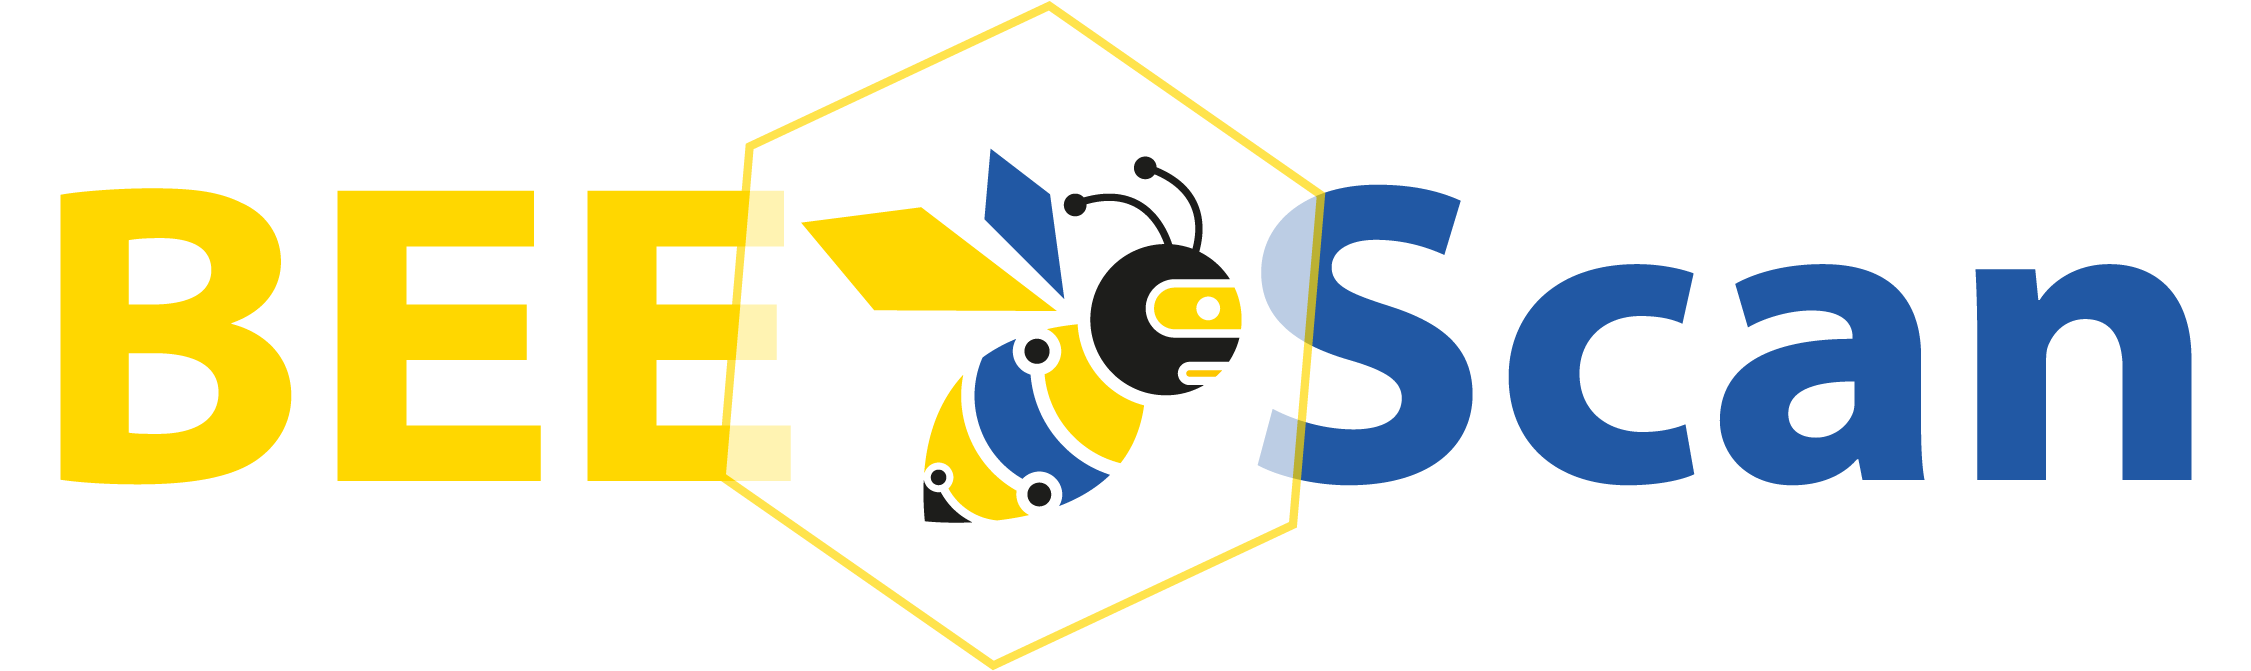 BEE:SCAN logo